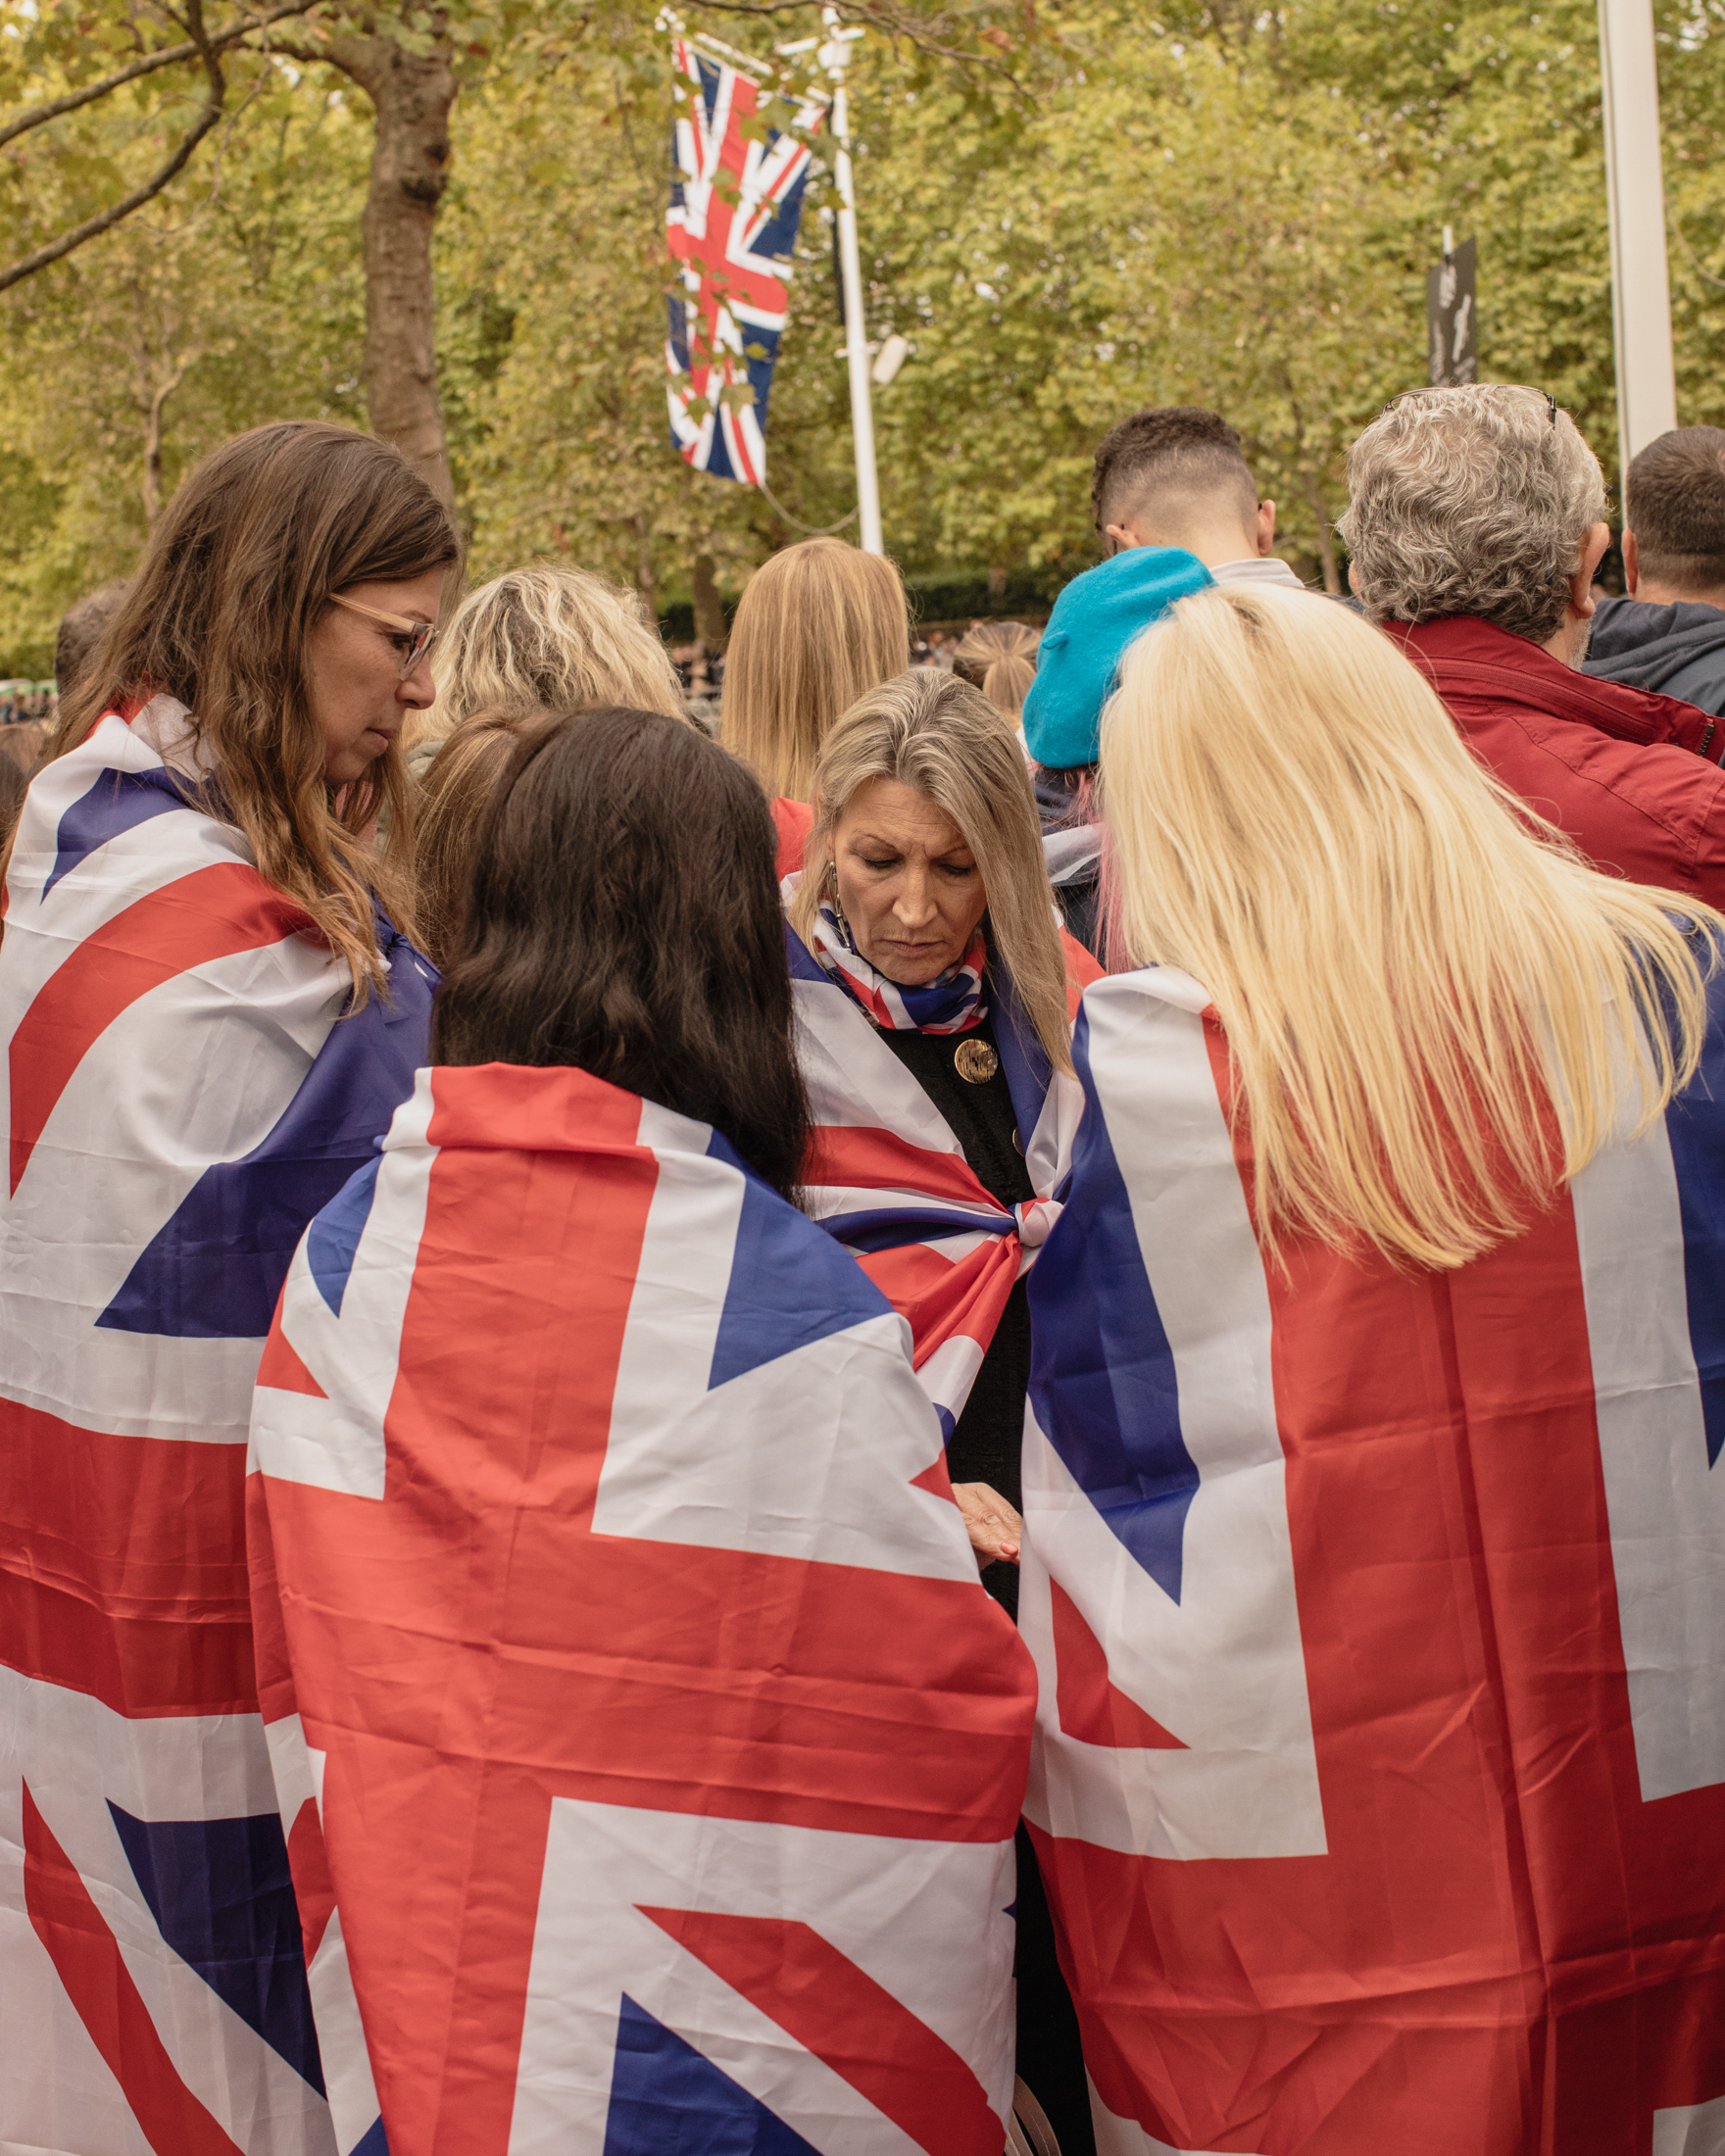 Group of women in Union Jack flags during Queen Elizabeth II's funeral